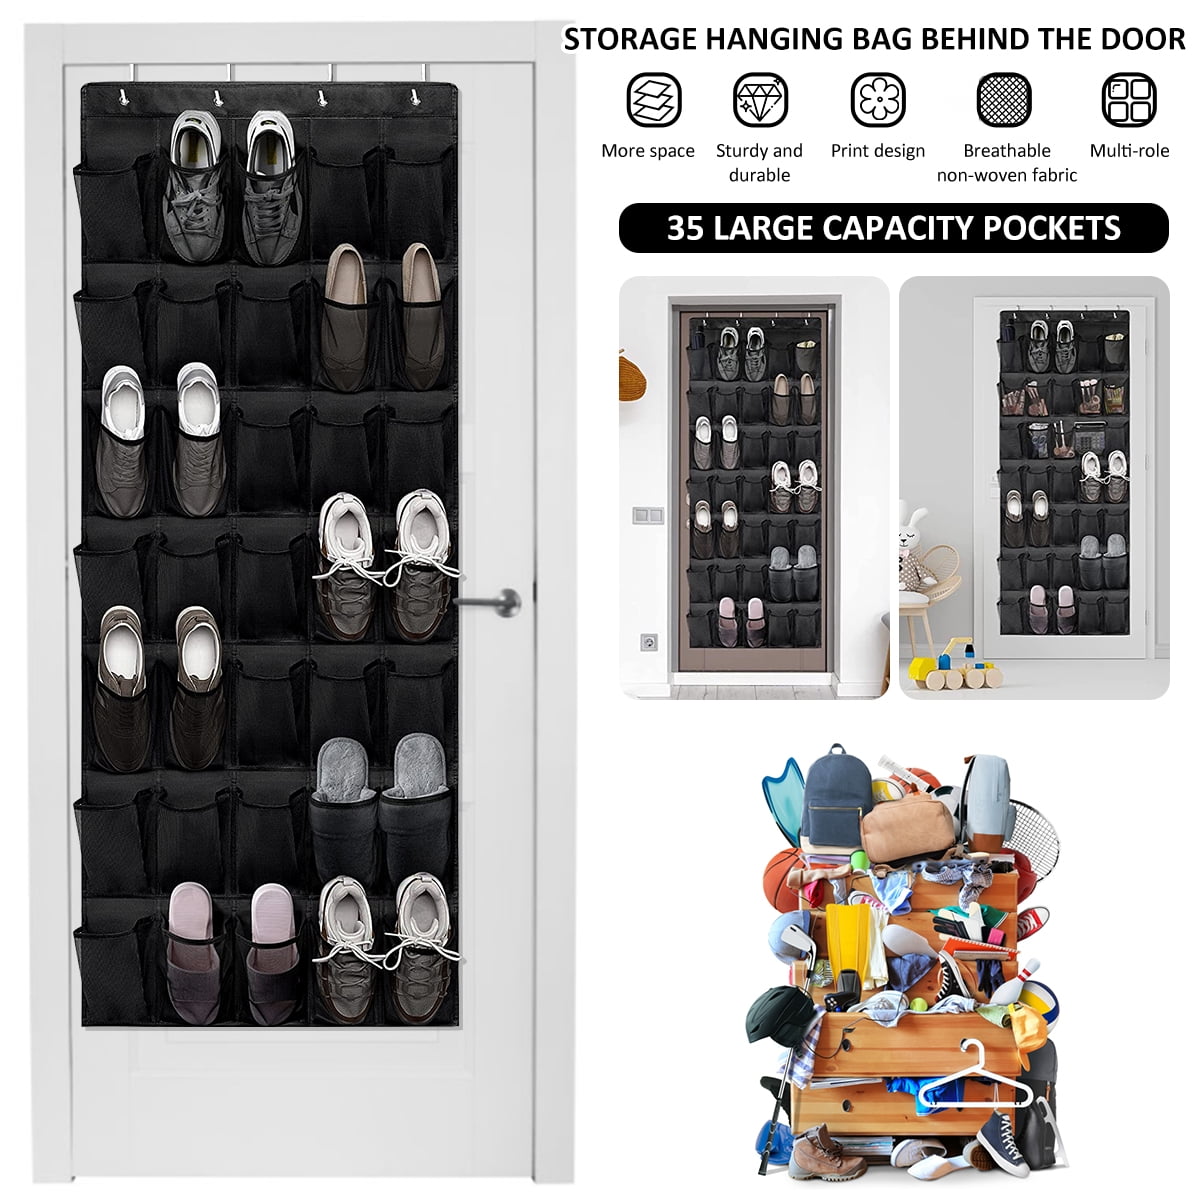 Zober Hanging Shoe Organizer for Closet - 10-Shelf Hanging Shoe Rack w/Side Mesh Pockets - 1 Pack Space Saving Shoe Holder (Brown)